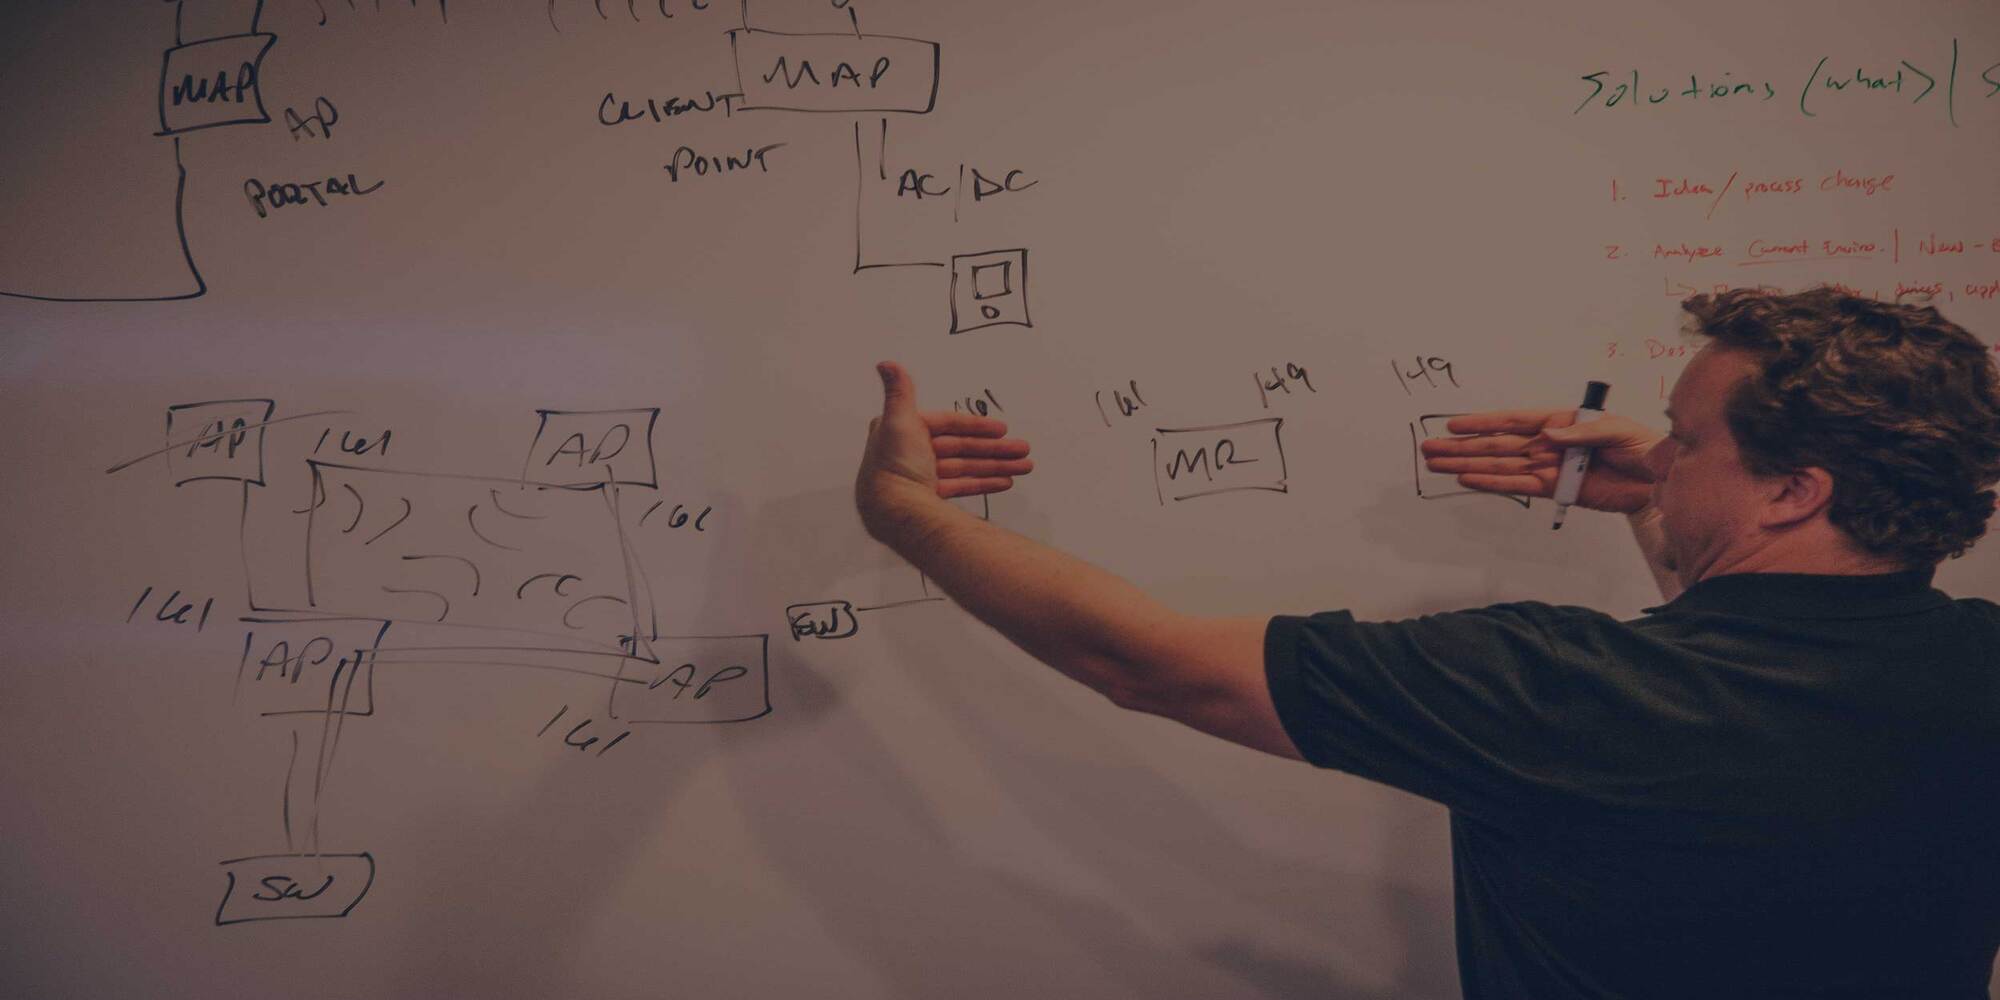 Senior Network Engineer Explaining Wireless LAN on a Whiteboard